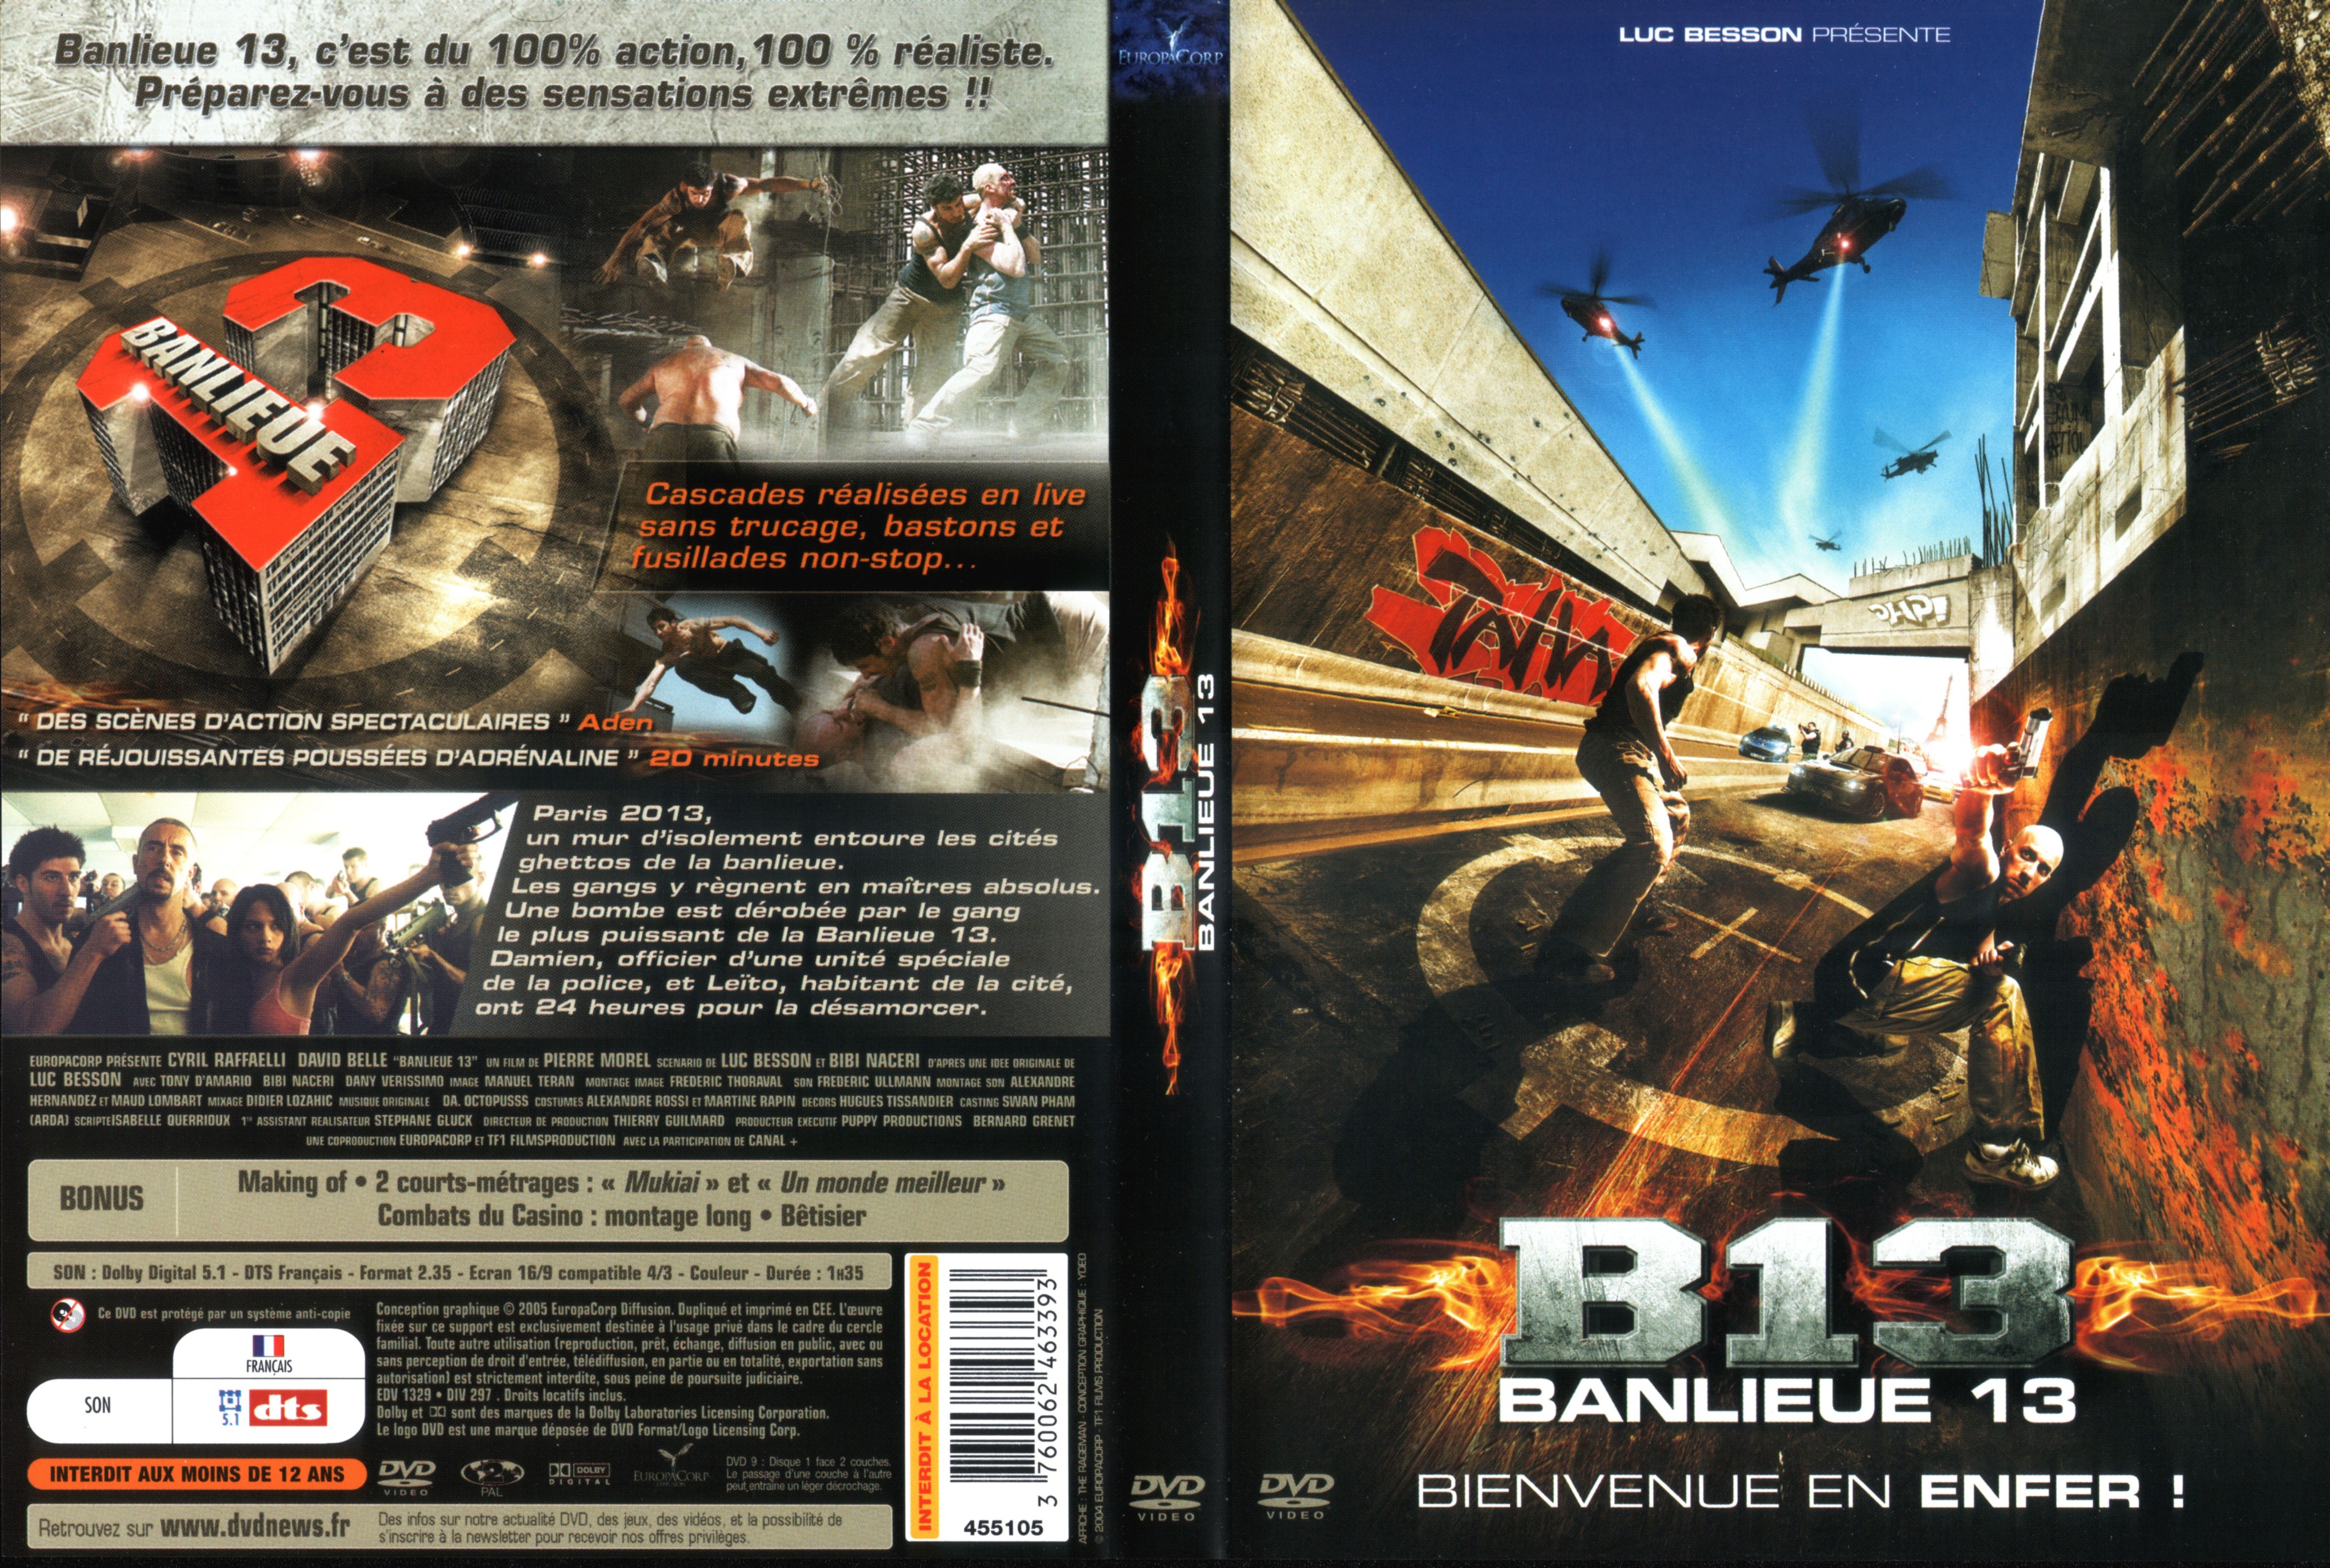 Jaquette DVD Banlieue 13 v2